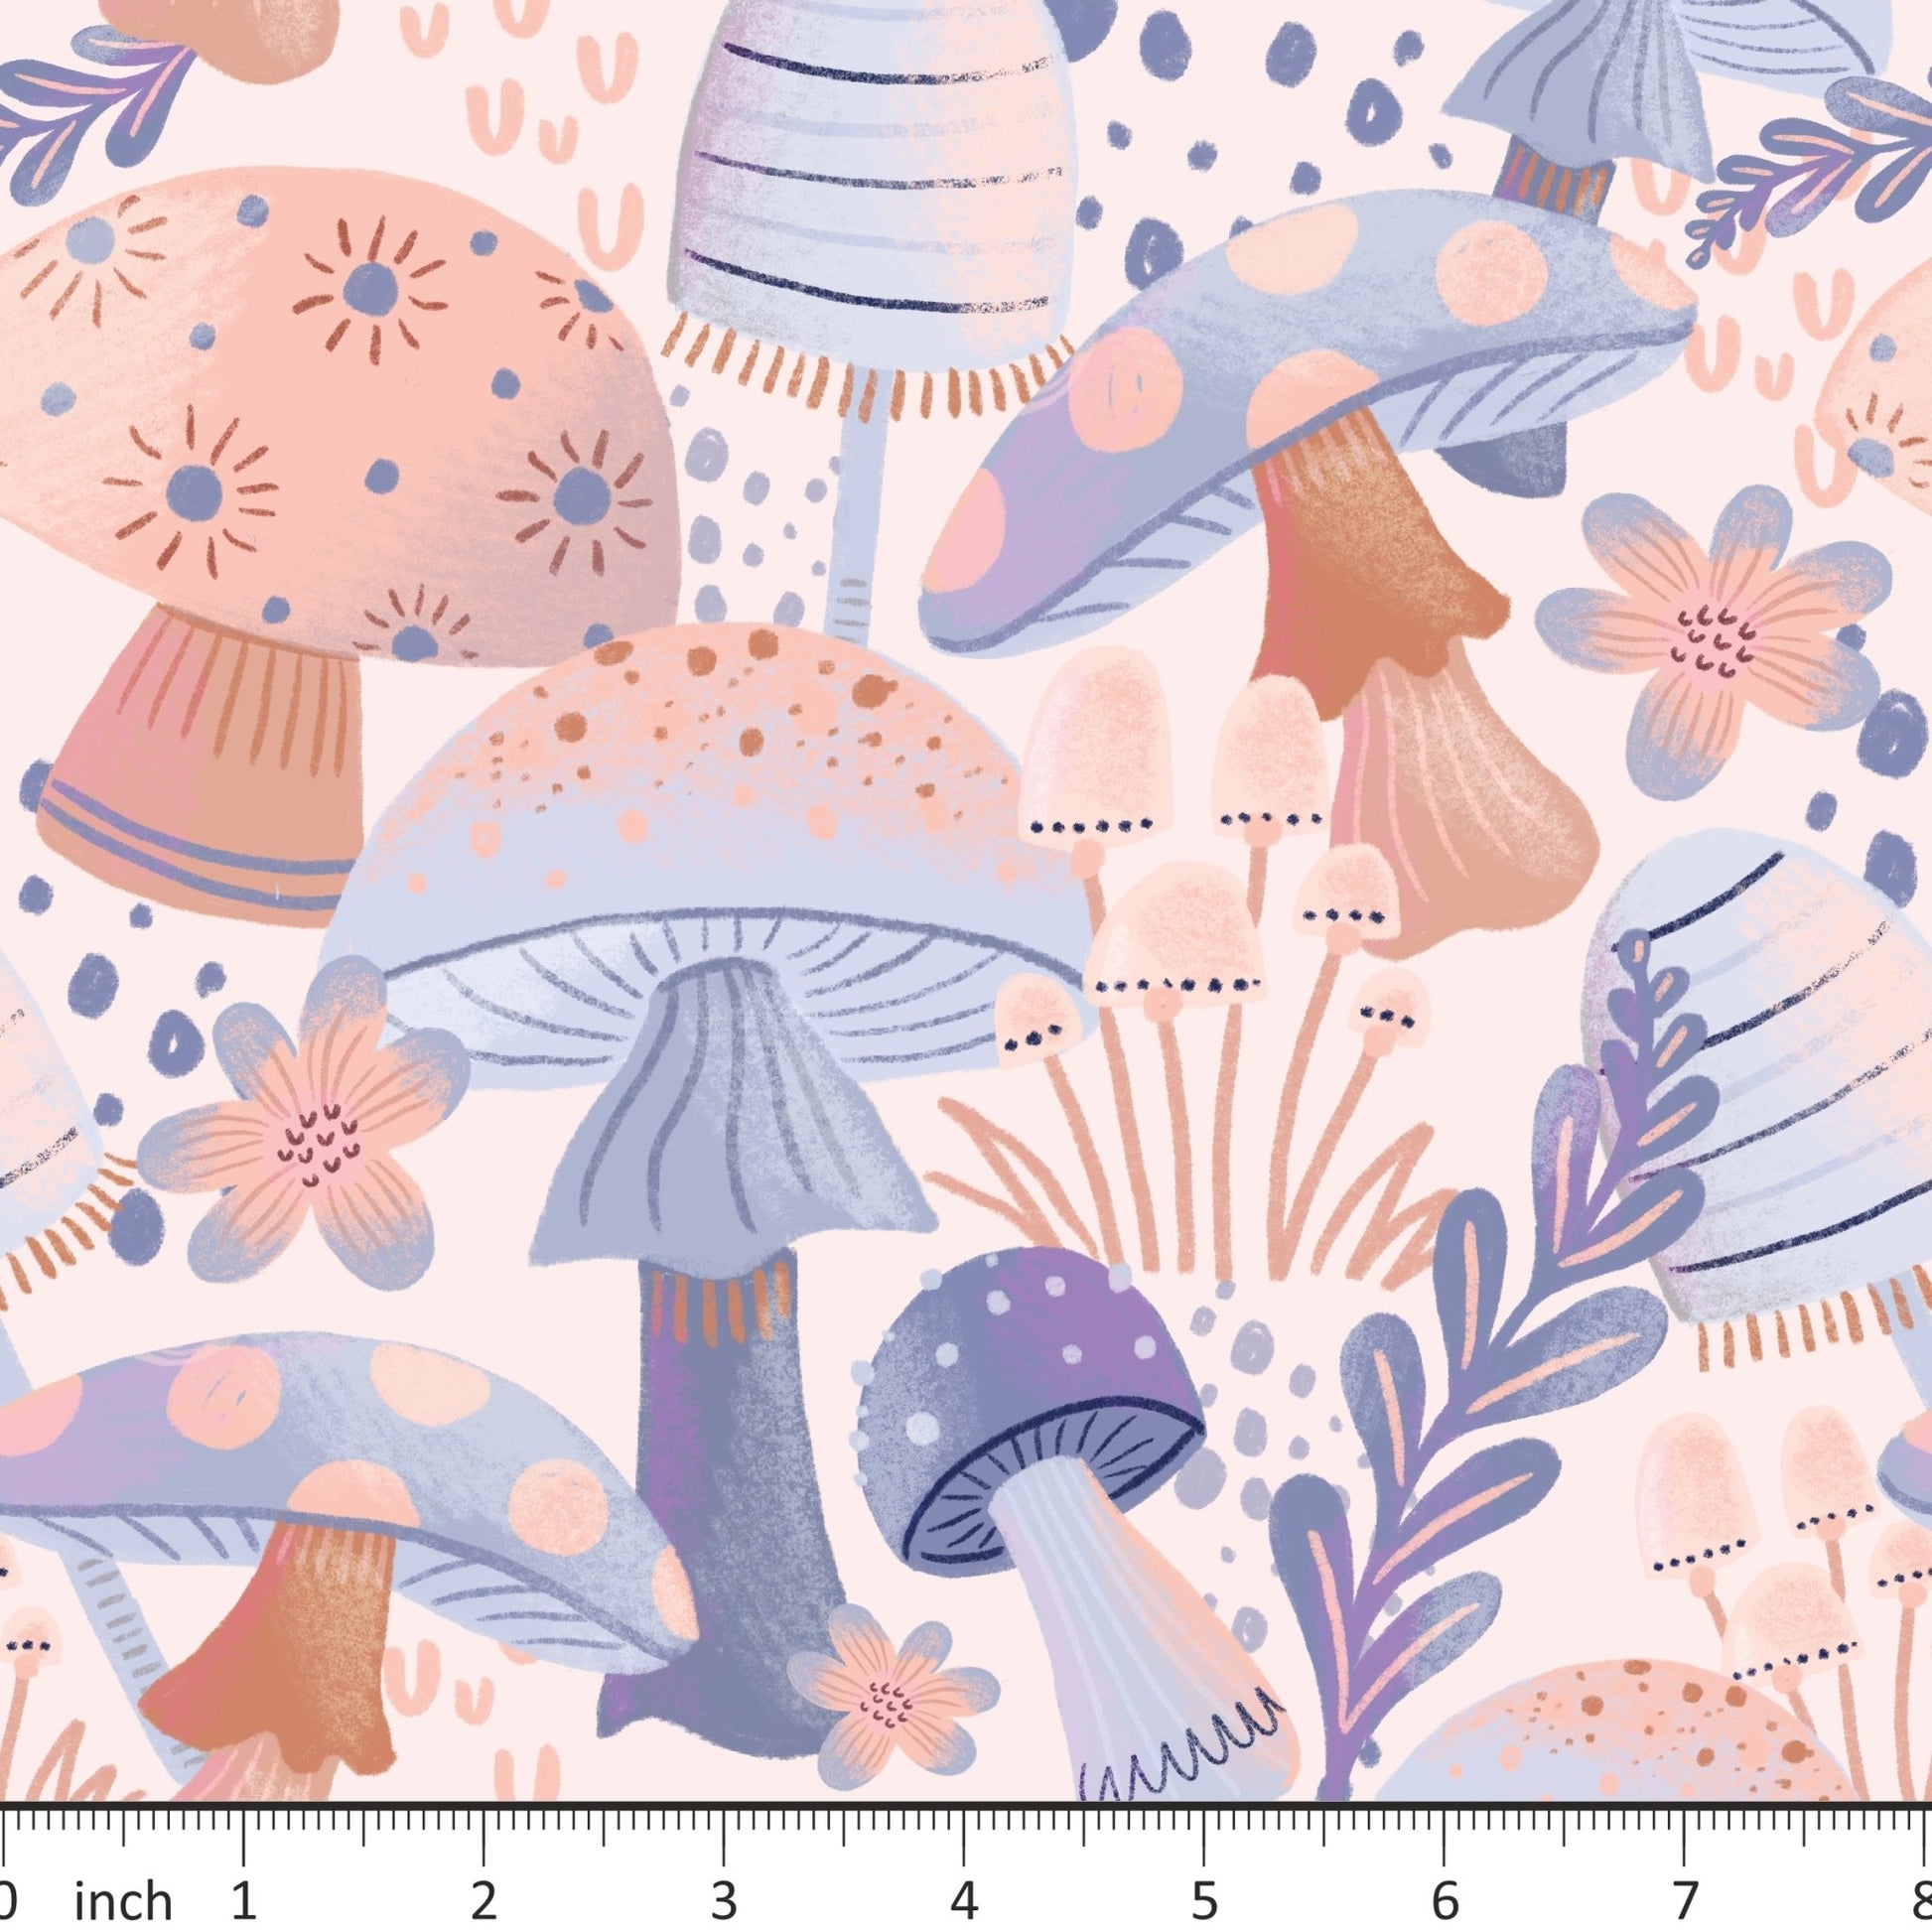 FineapplePair - Mushroom - Light Background - Little Rhody Sewing Co.